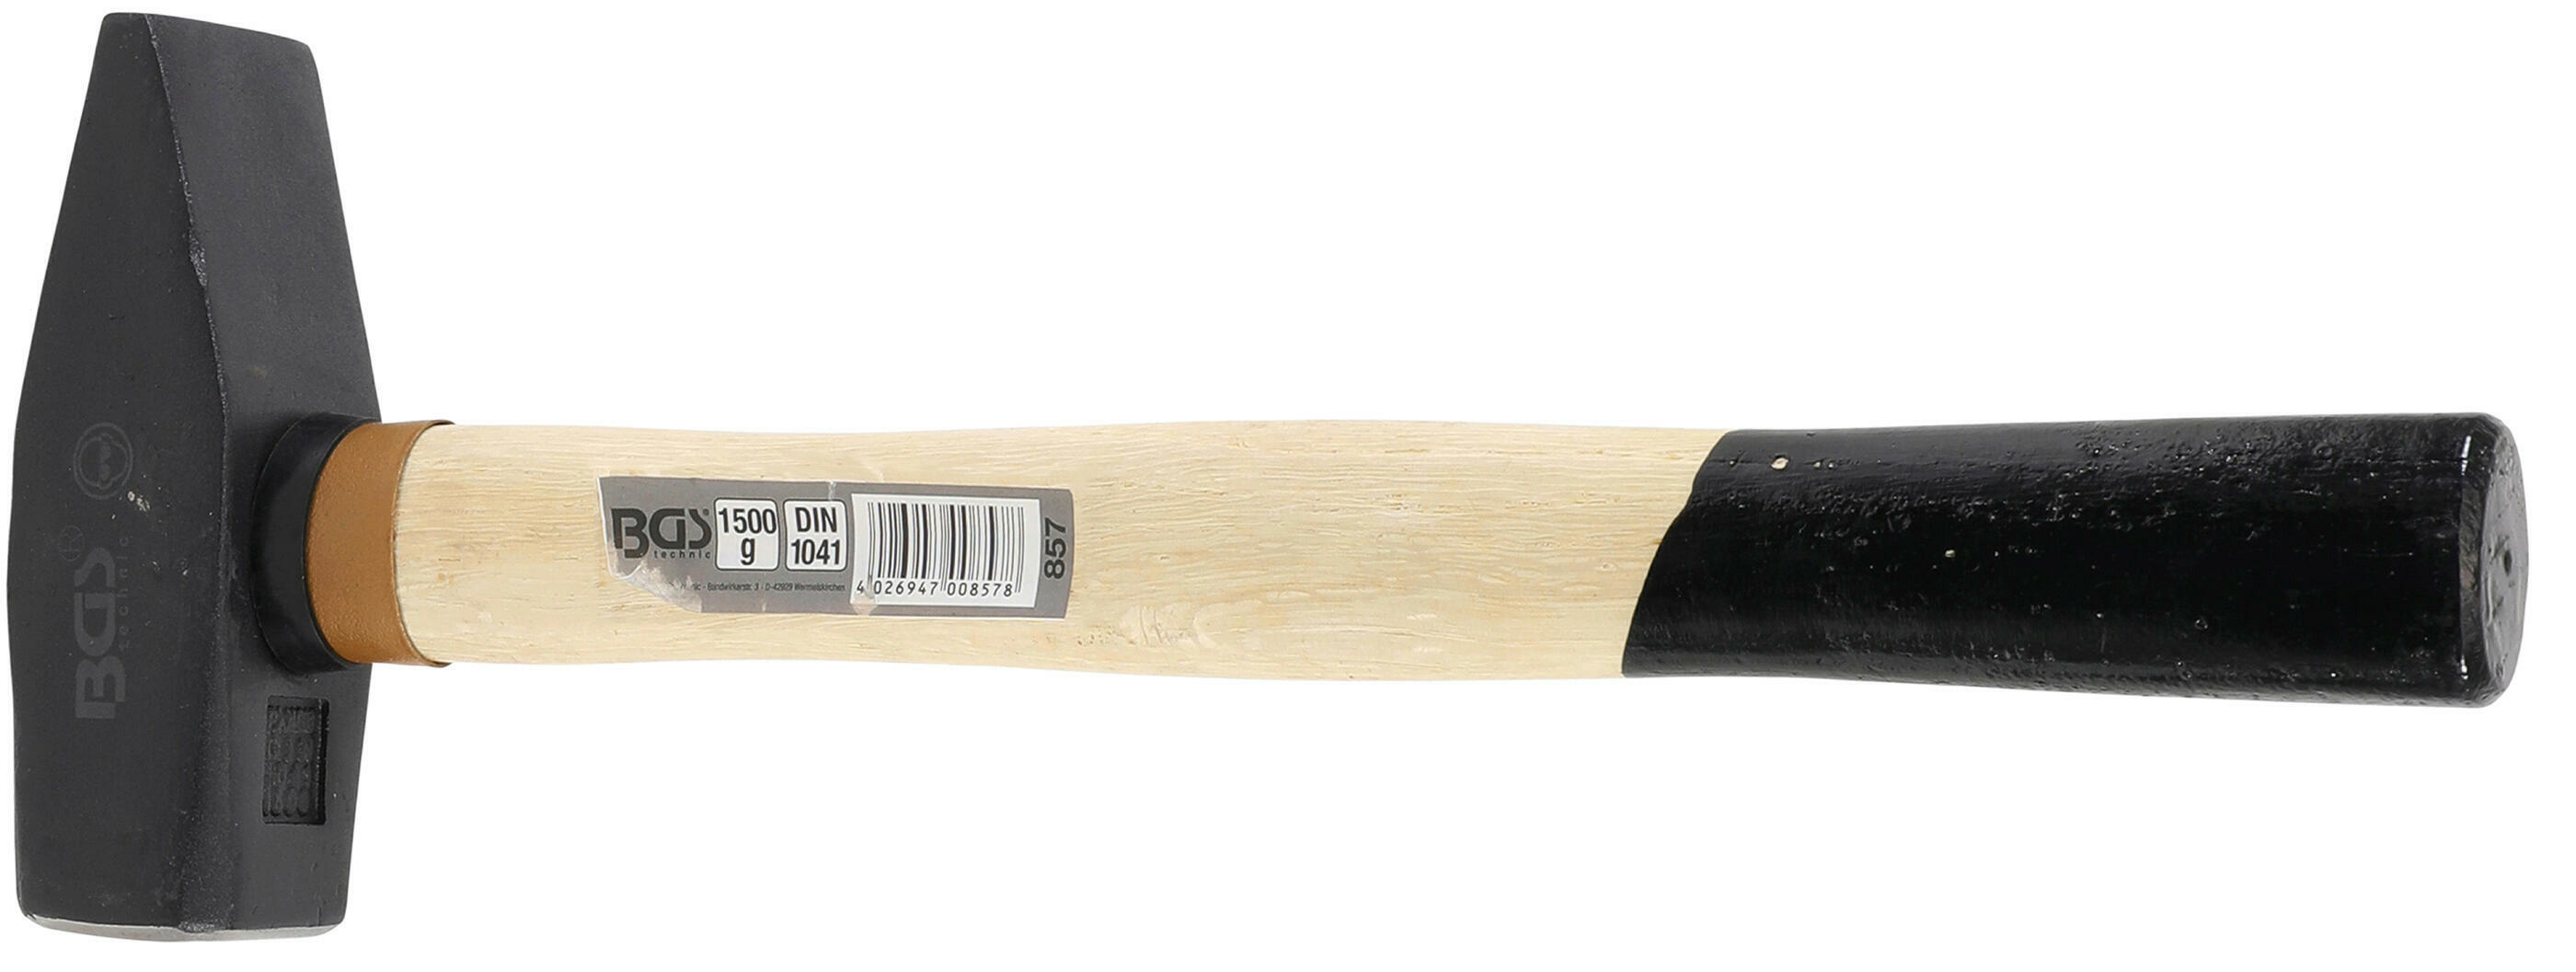 Schlosserhammer | Holz-Stiel | DIN 1041 | 1500 g